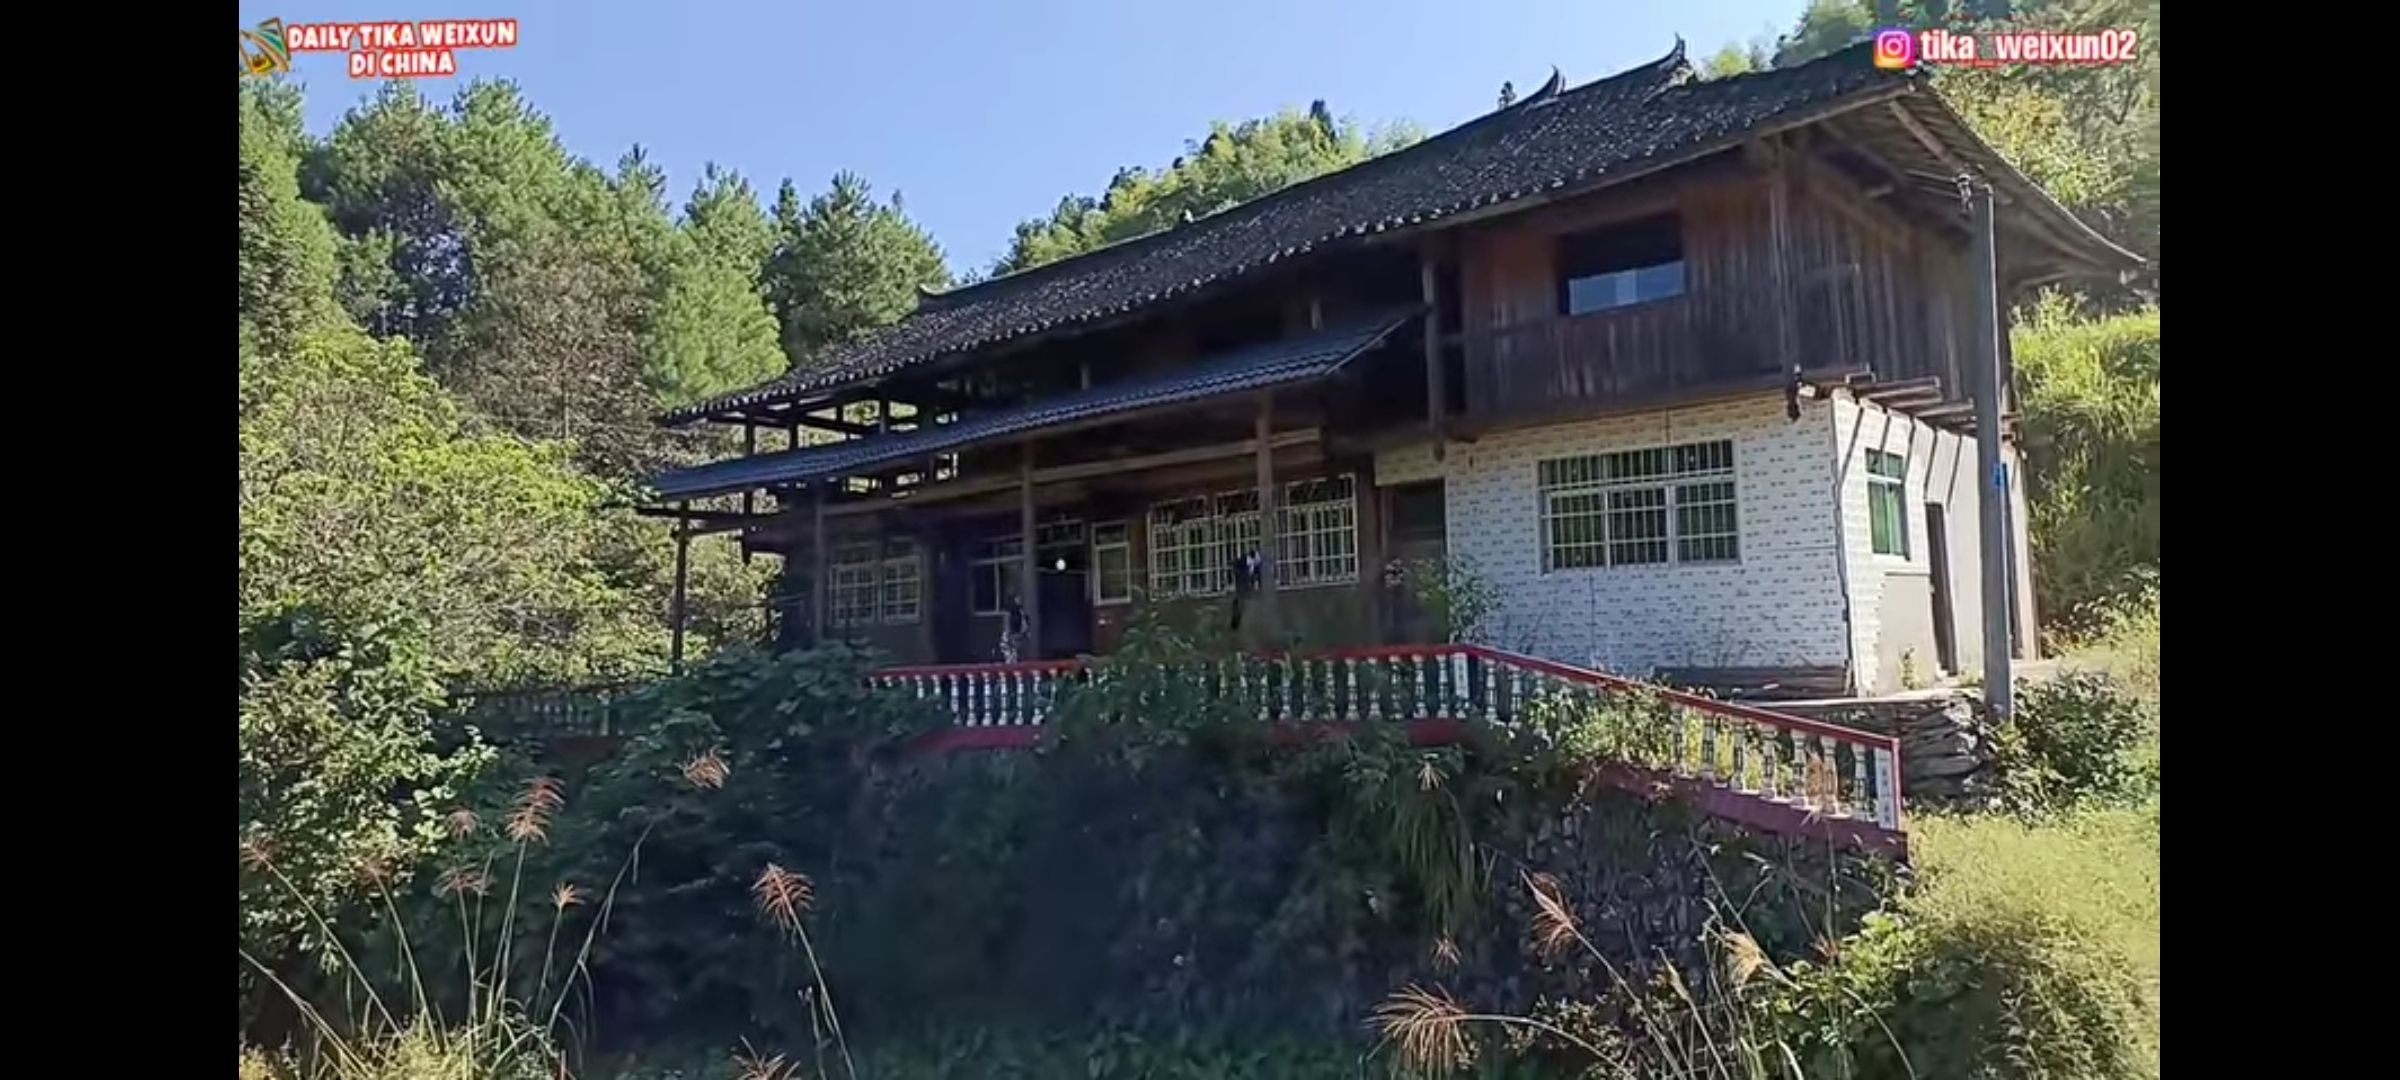 Rumah Weixun yang ditinggali selama 10 tahun